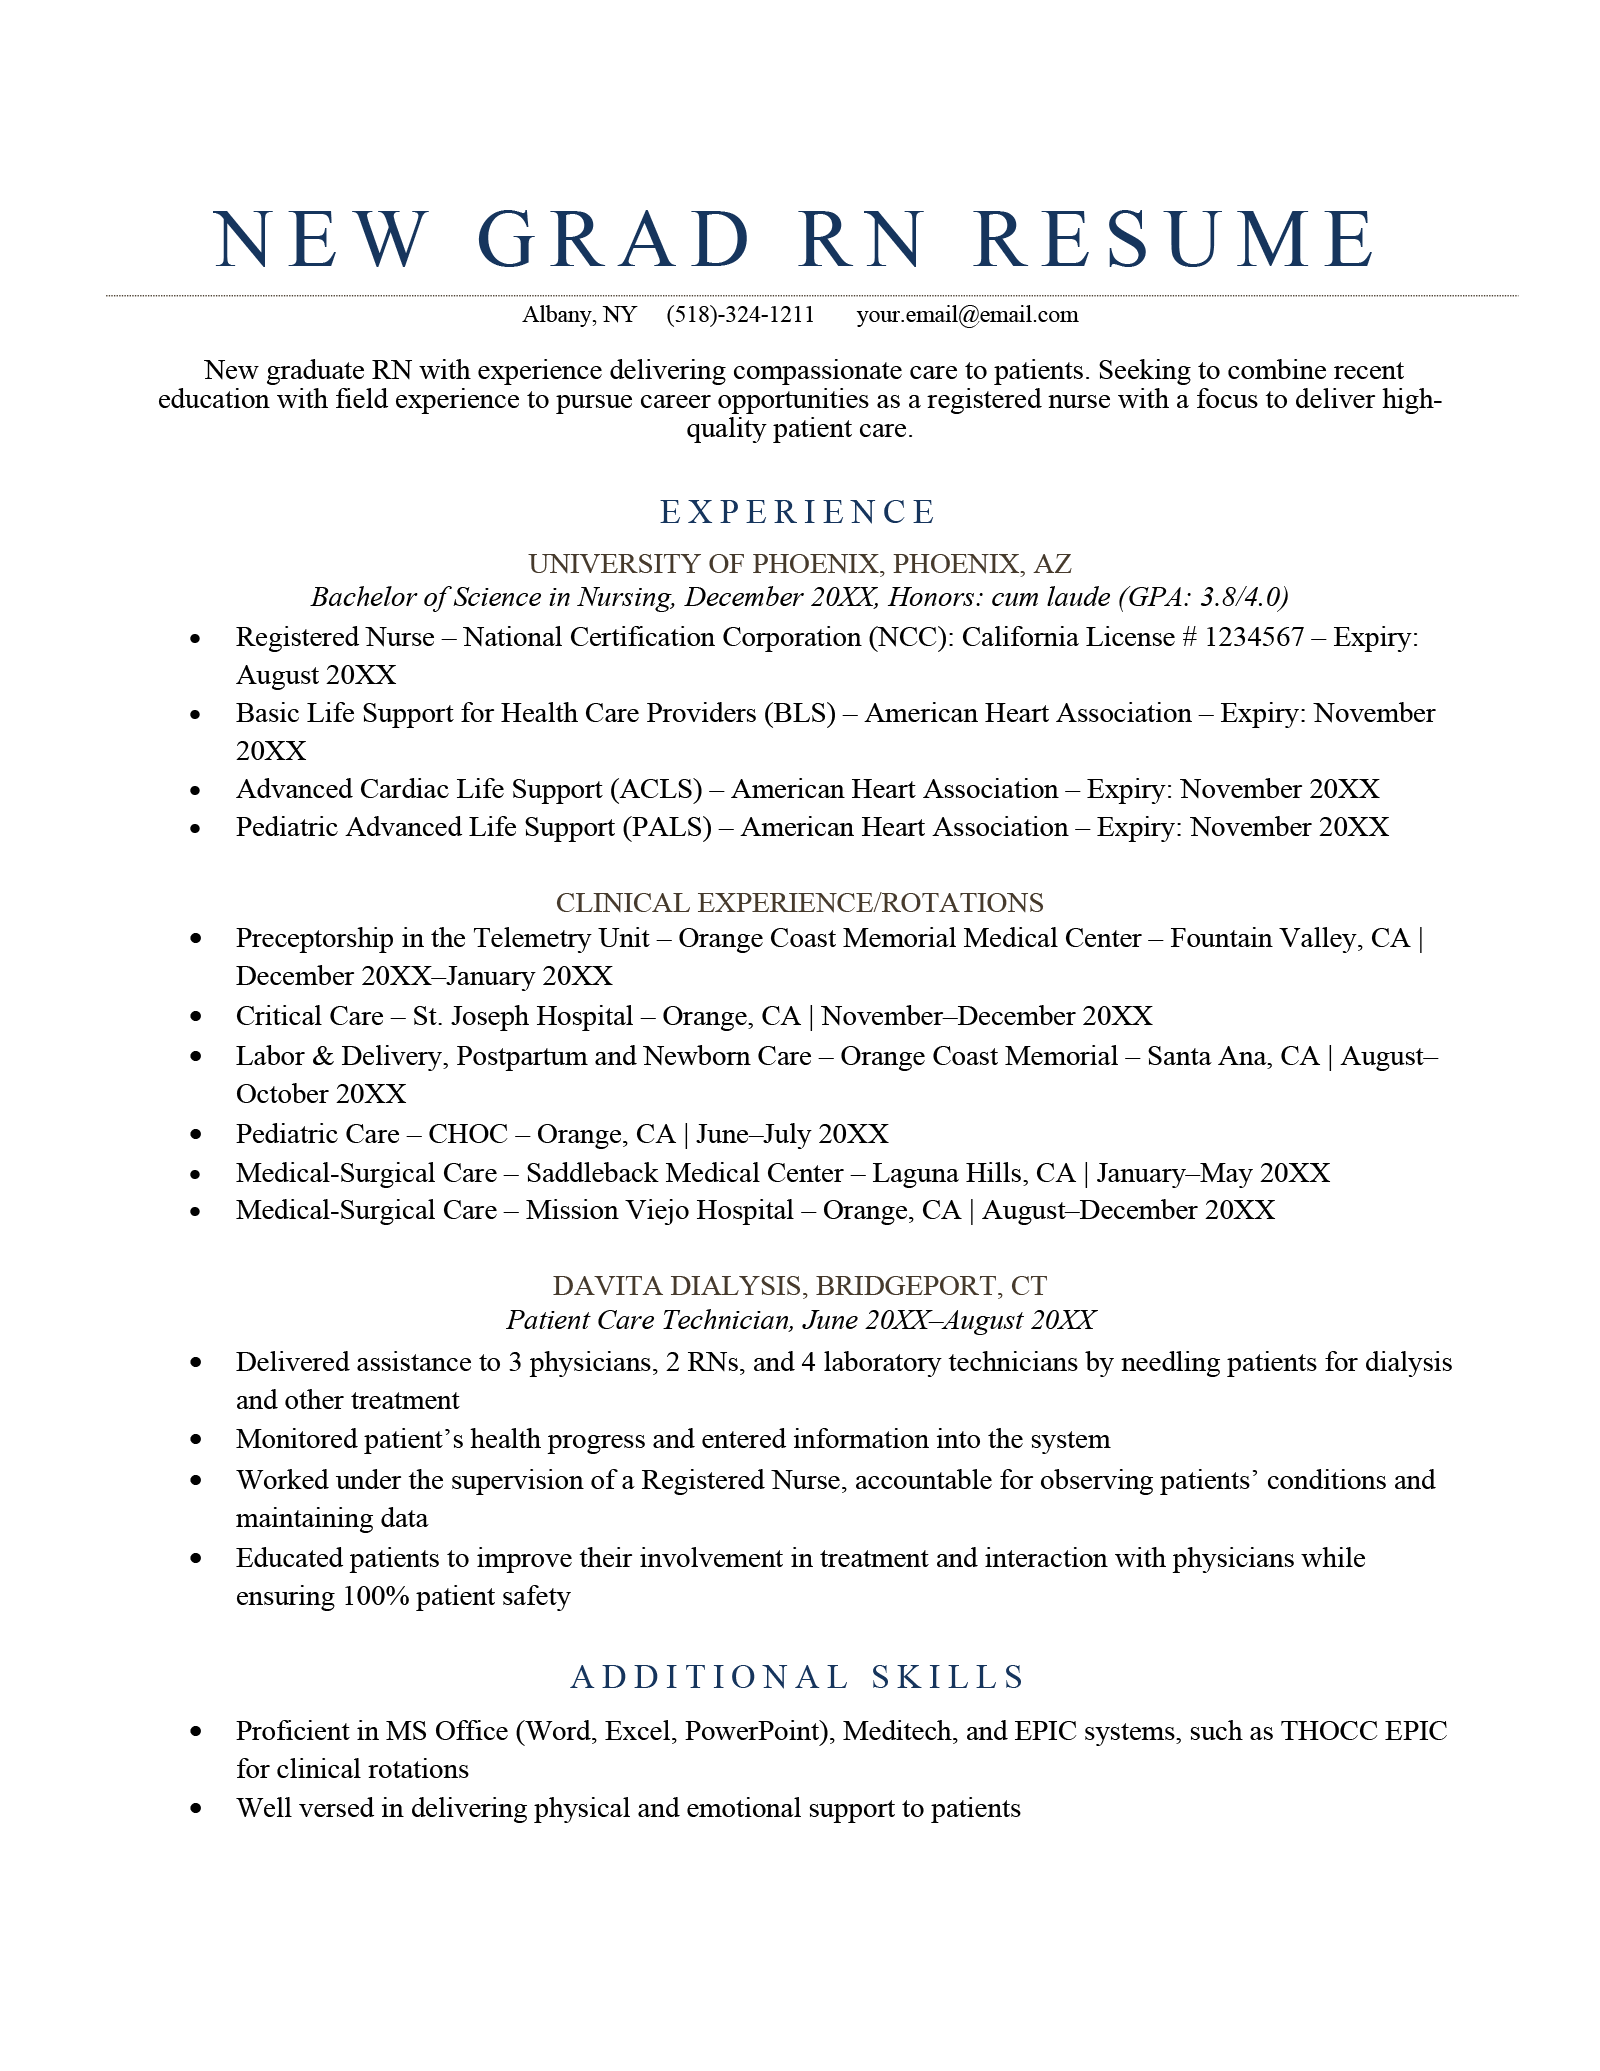 New Grad RN Resume Template